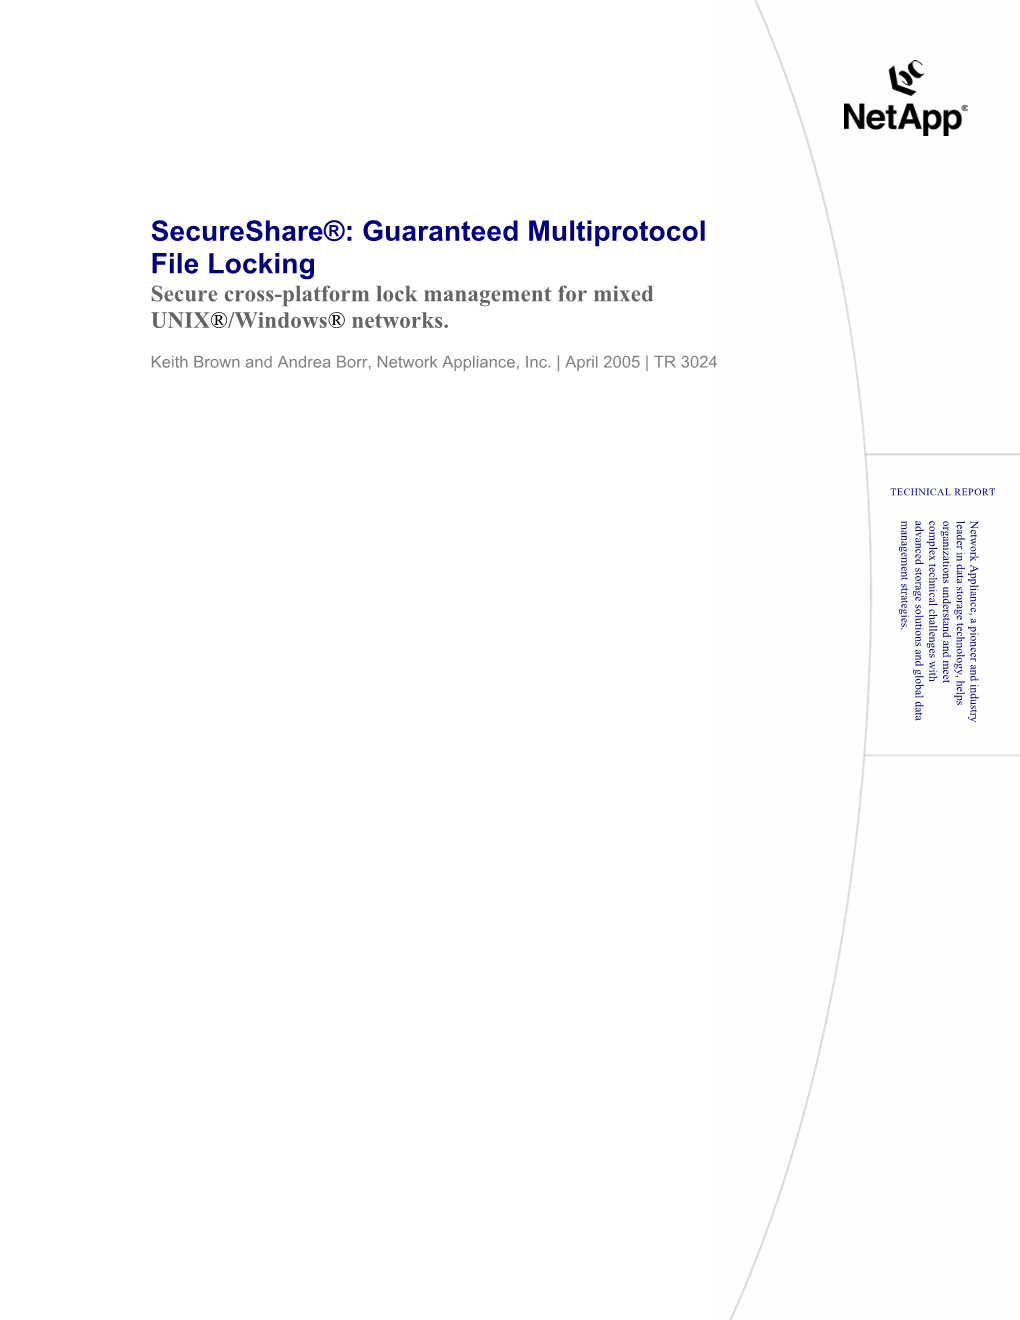 Secureshare®: Guaranteed Multiprotocol File Locking Secure Cross-Platform Lock Management for Mixed UNIX®/Windows® Networks